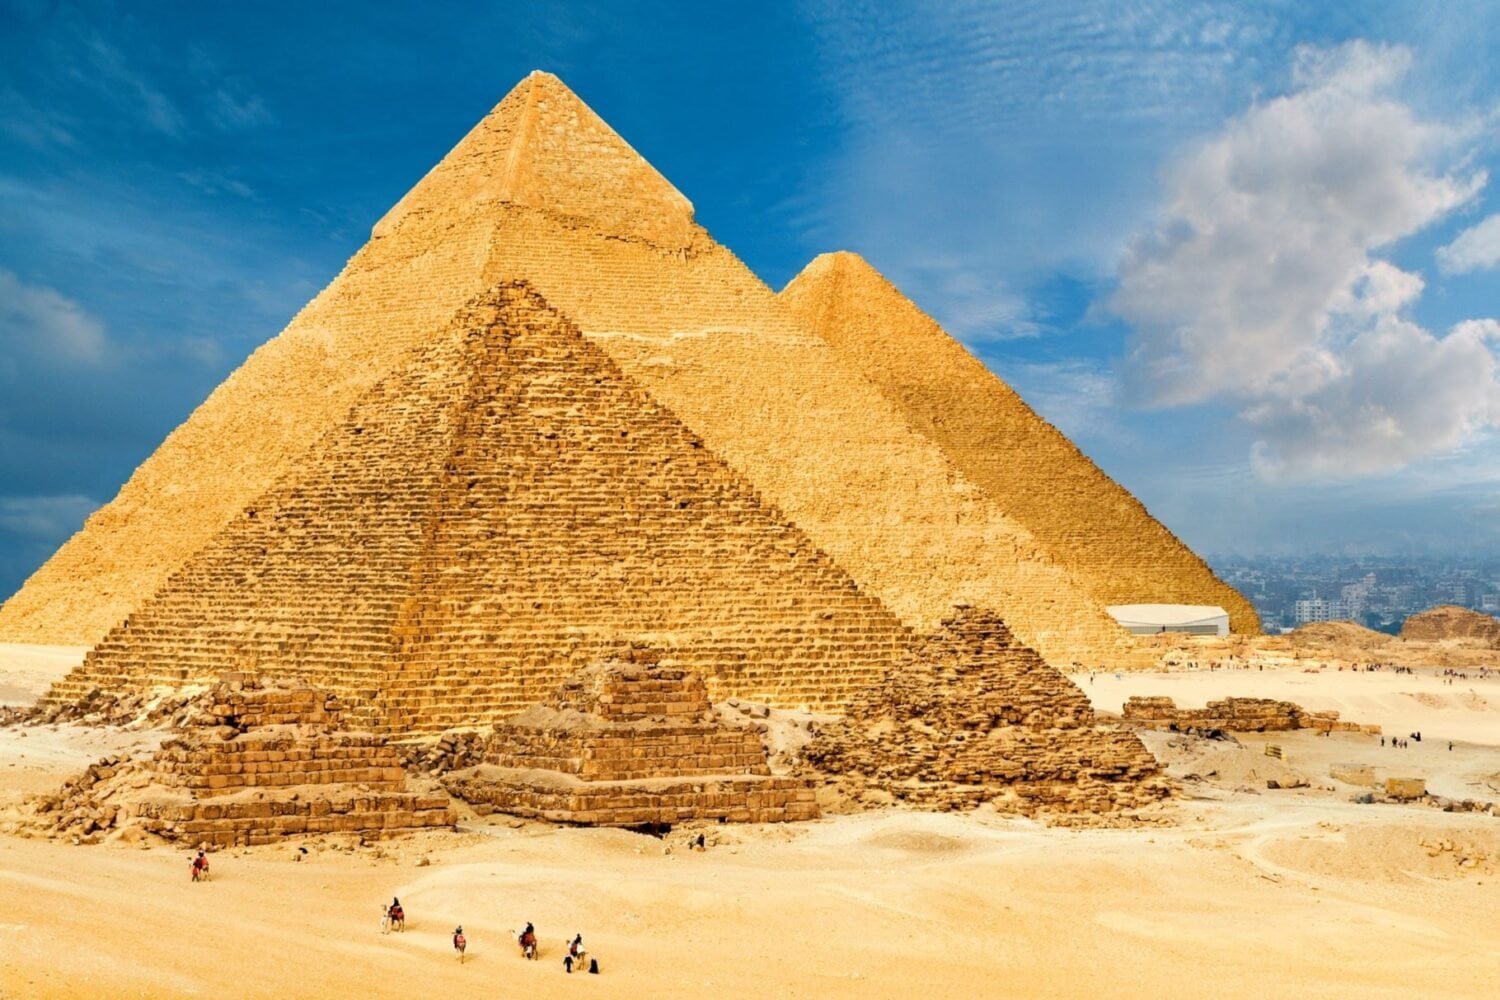 Egypt 4 Day Holiday To Cairo, Aswan & Abu Simbel From UK